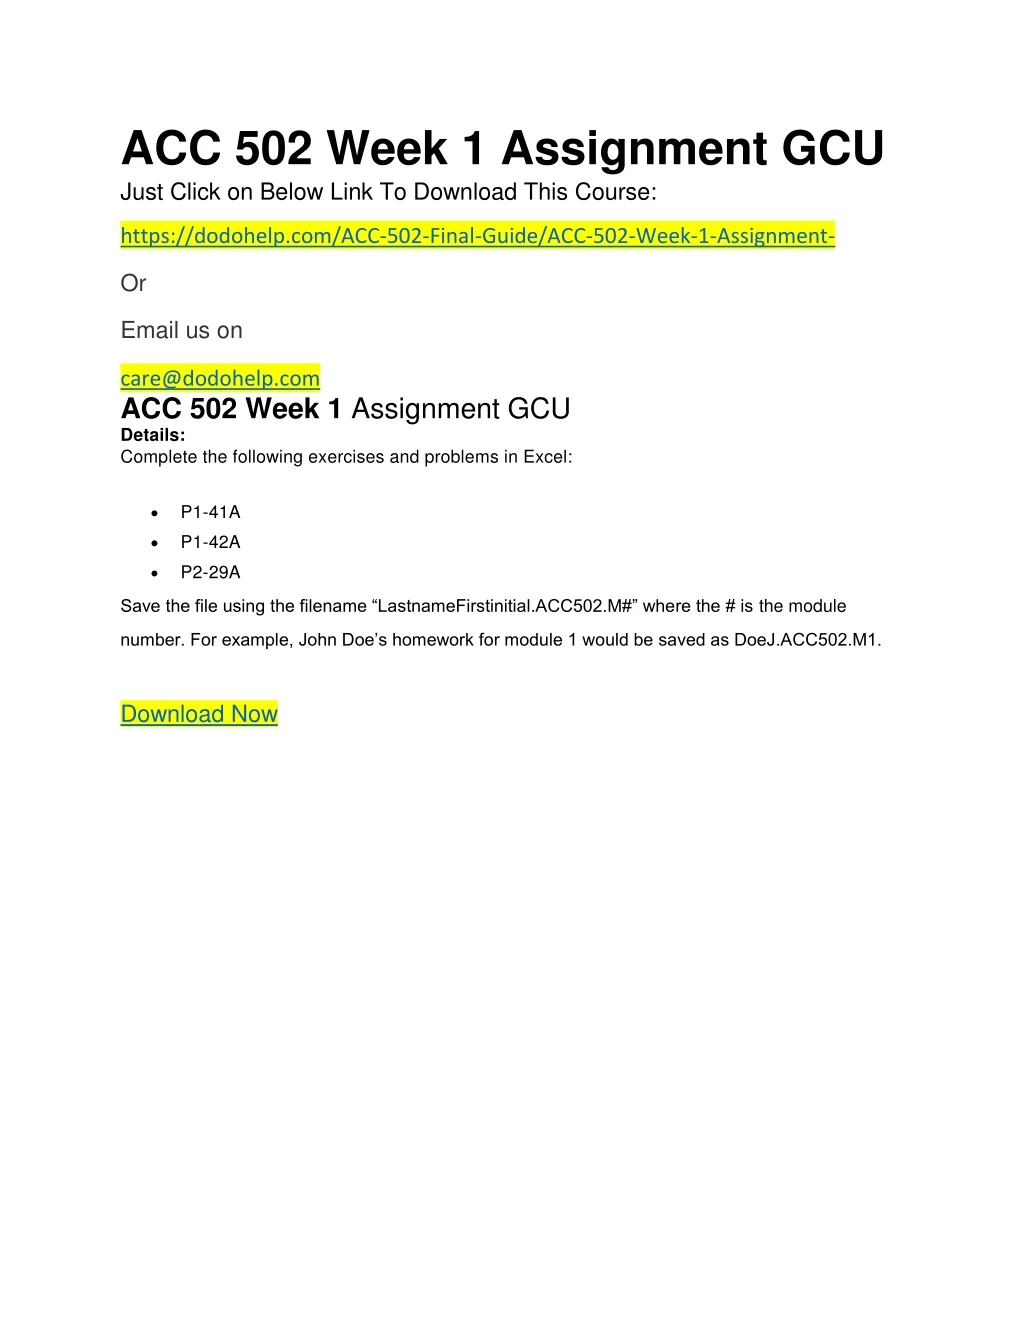 acc 502 week 1 assignment gcu just click on below